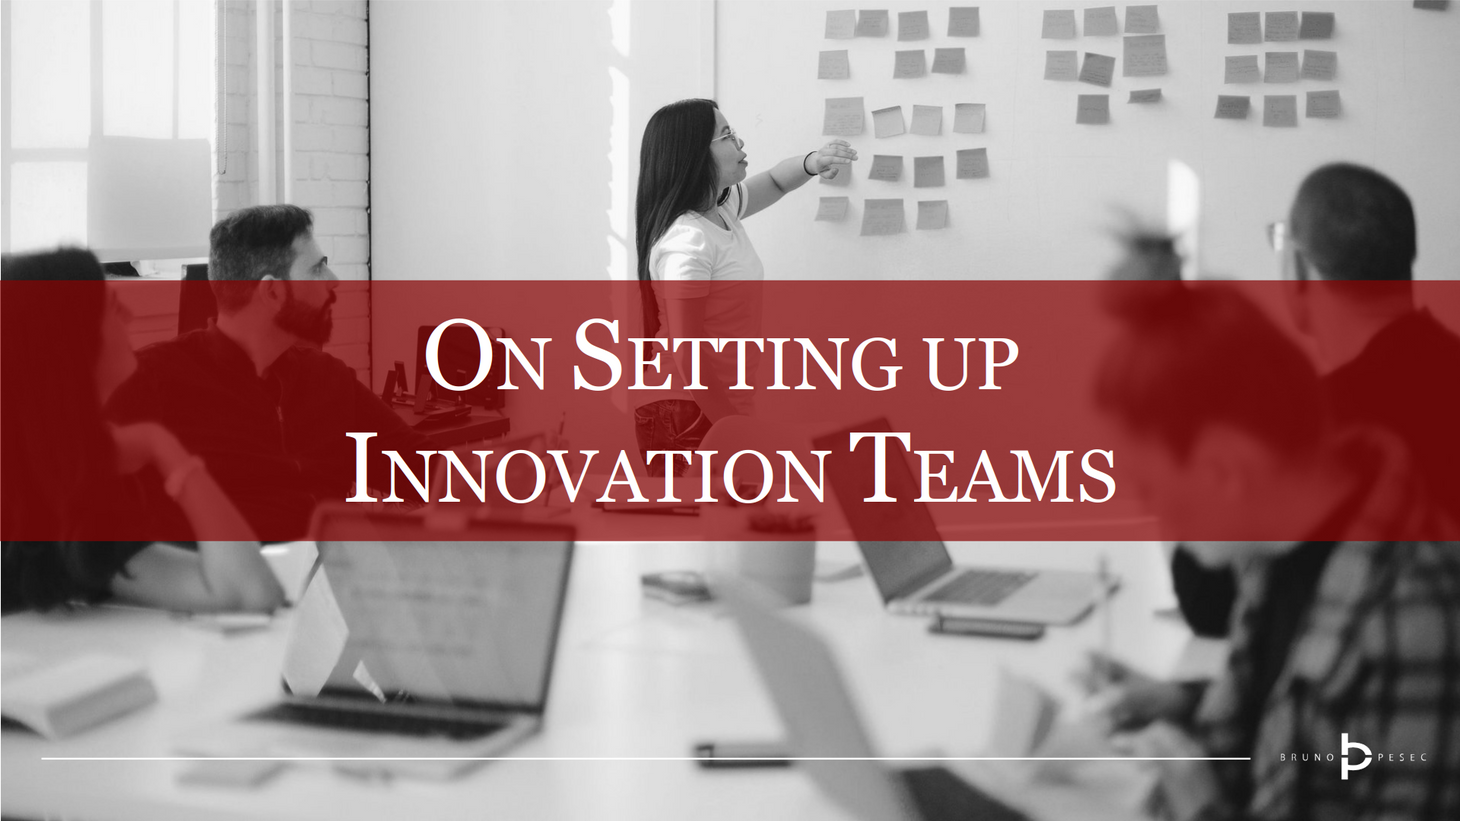 On setting up innovation teams